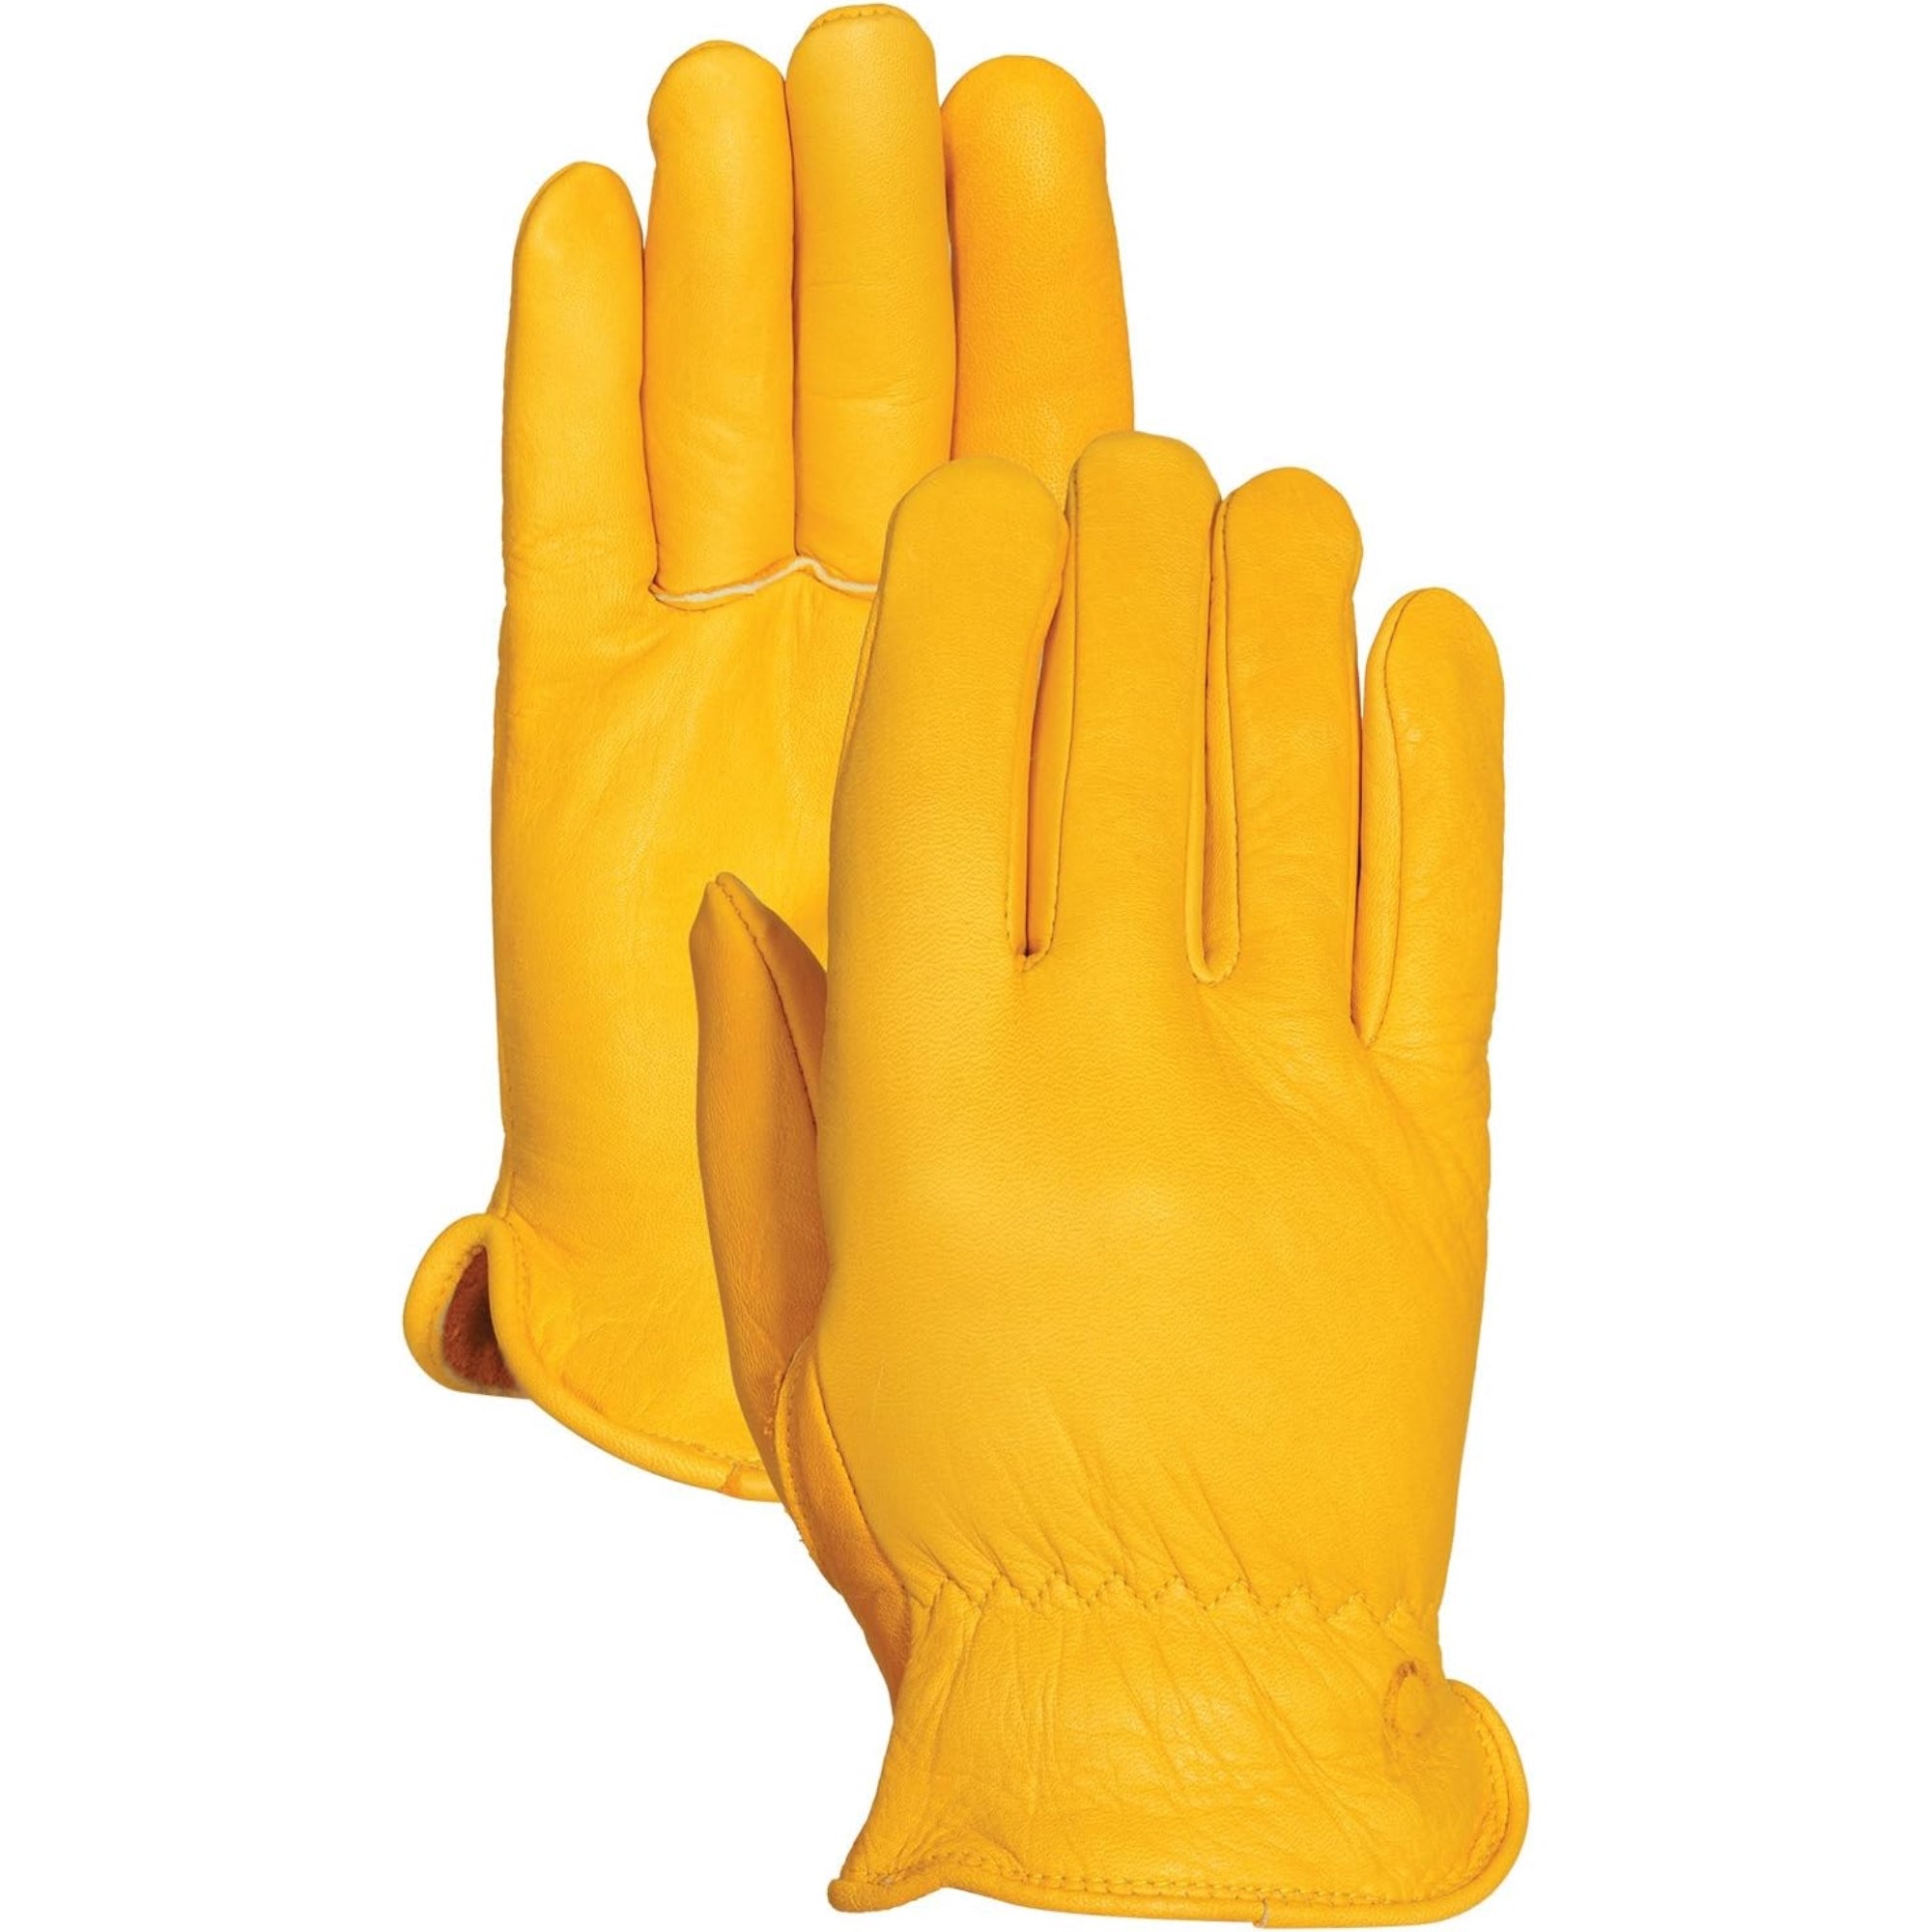 Bellingham Premium Cowhide Driver Gloves, Top Grain Golden Leather, Yellow, Large